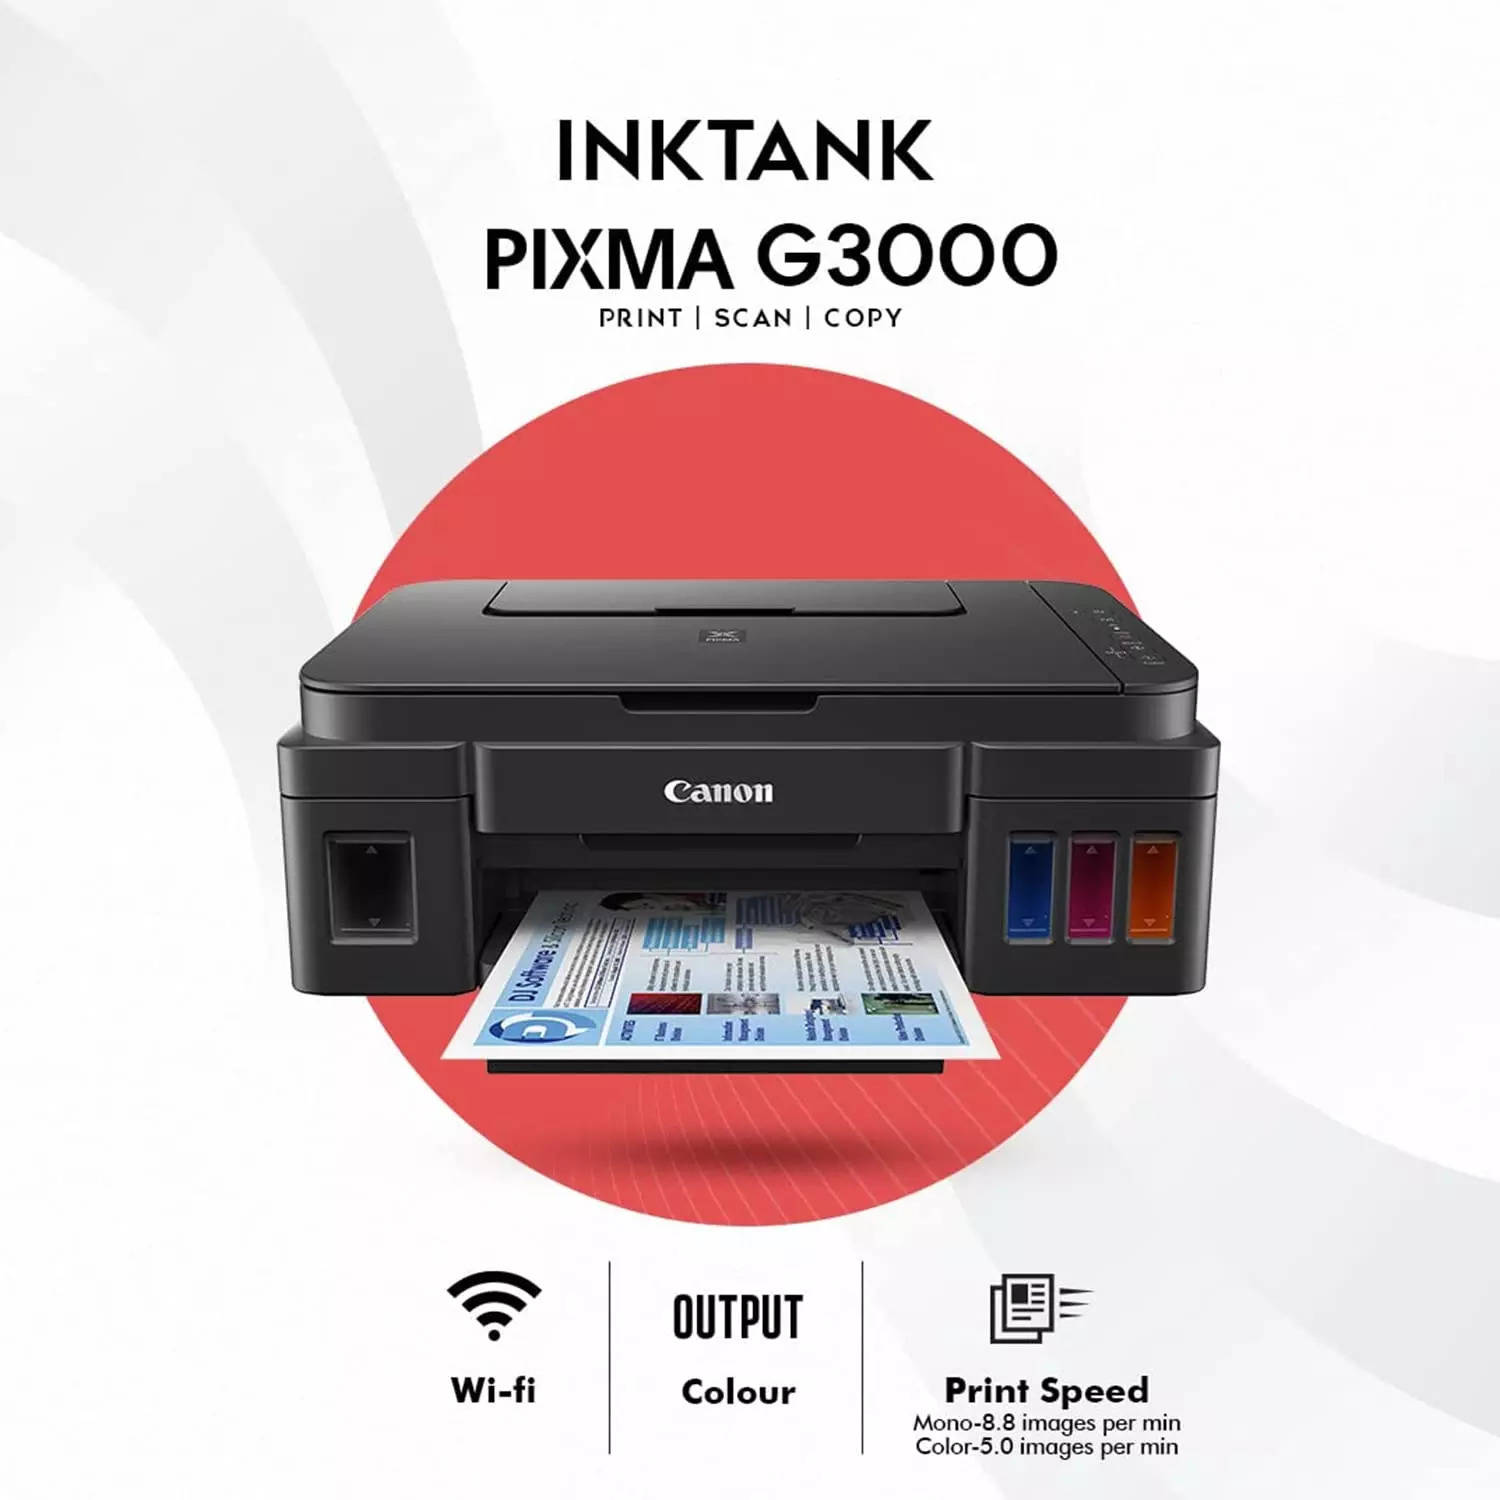 Canon Pixma G2020 Ink Tank Inkjet Printer, For Home, Paper Size